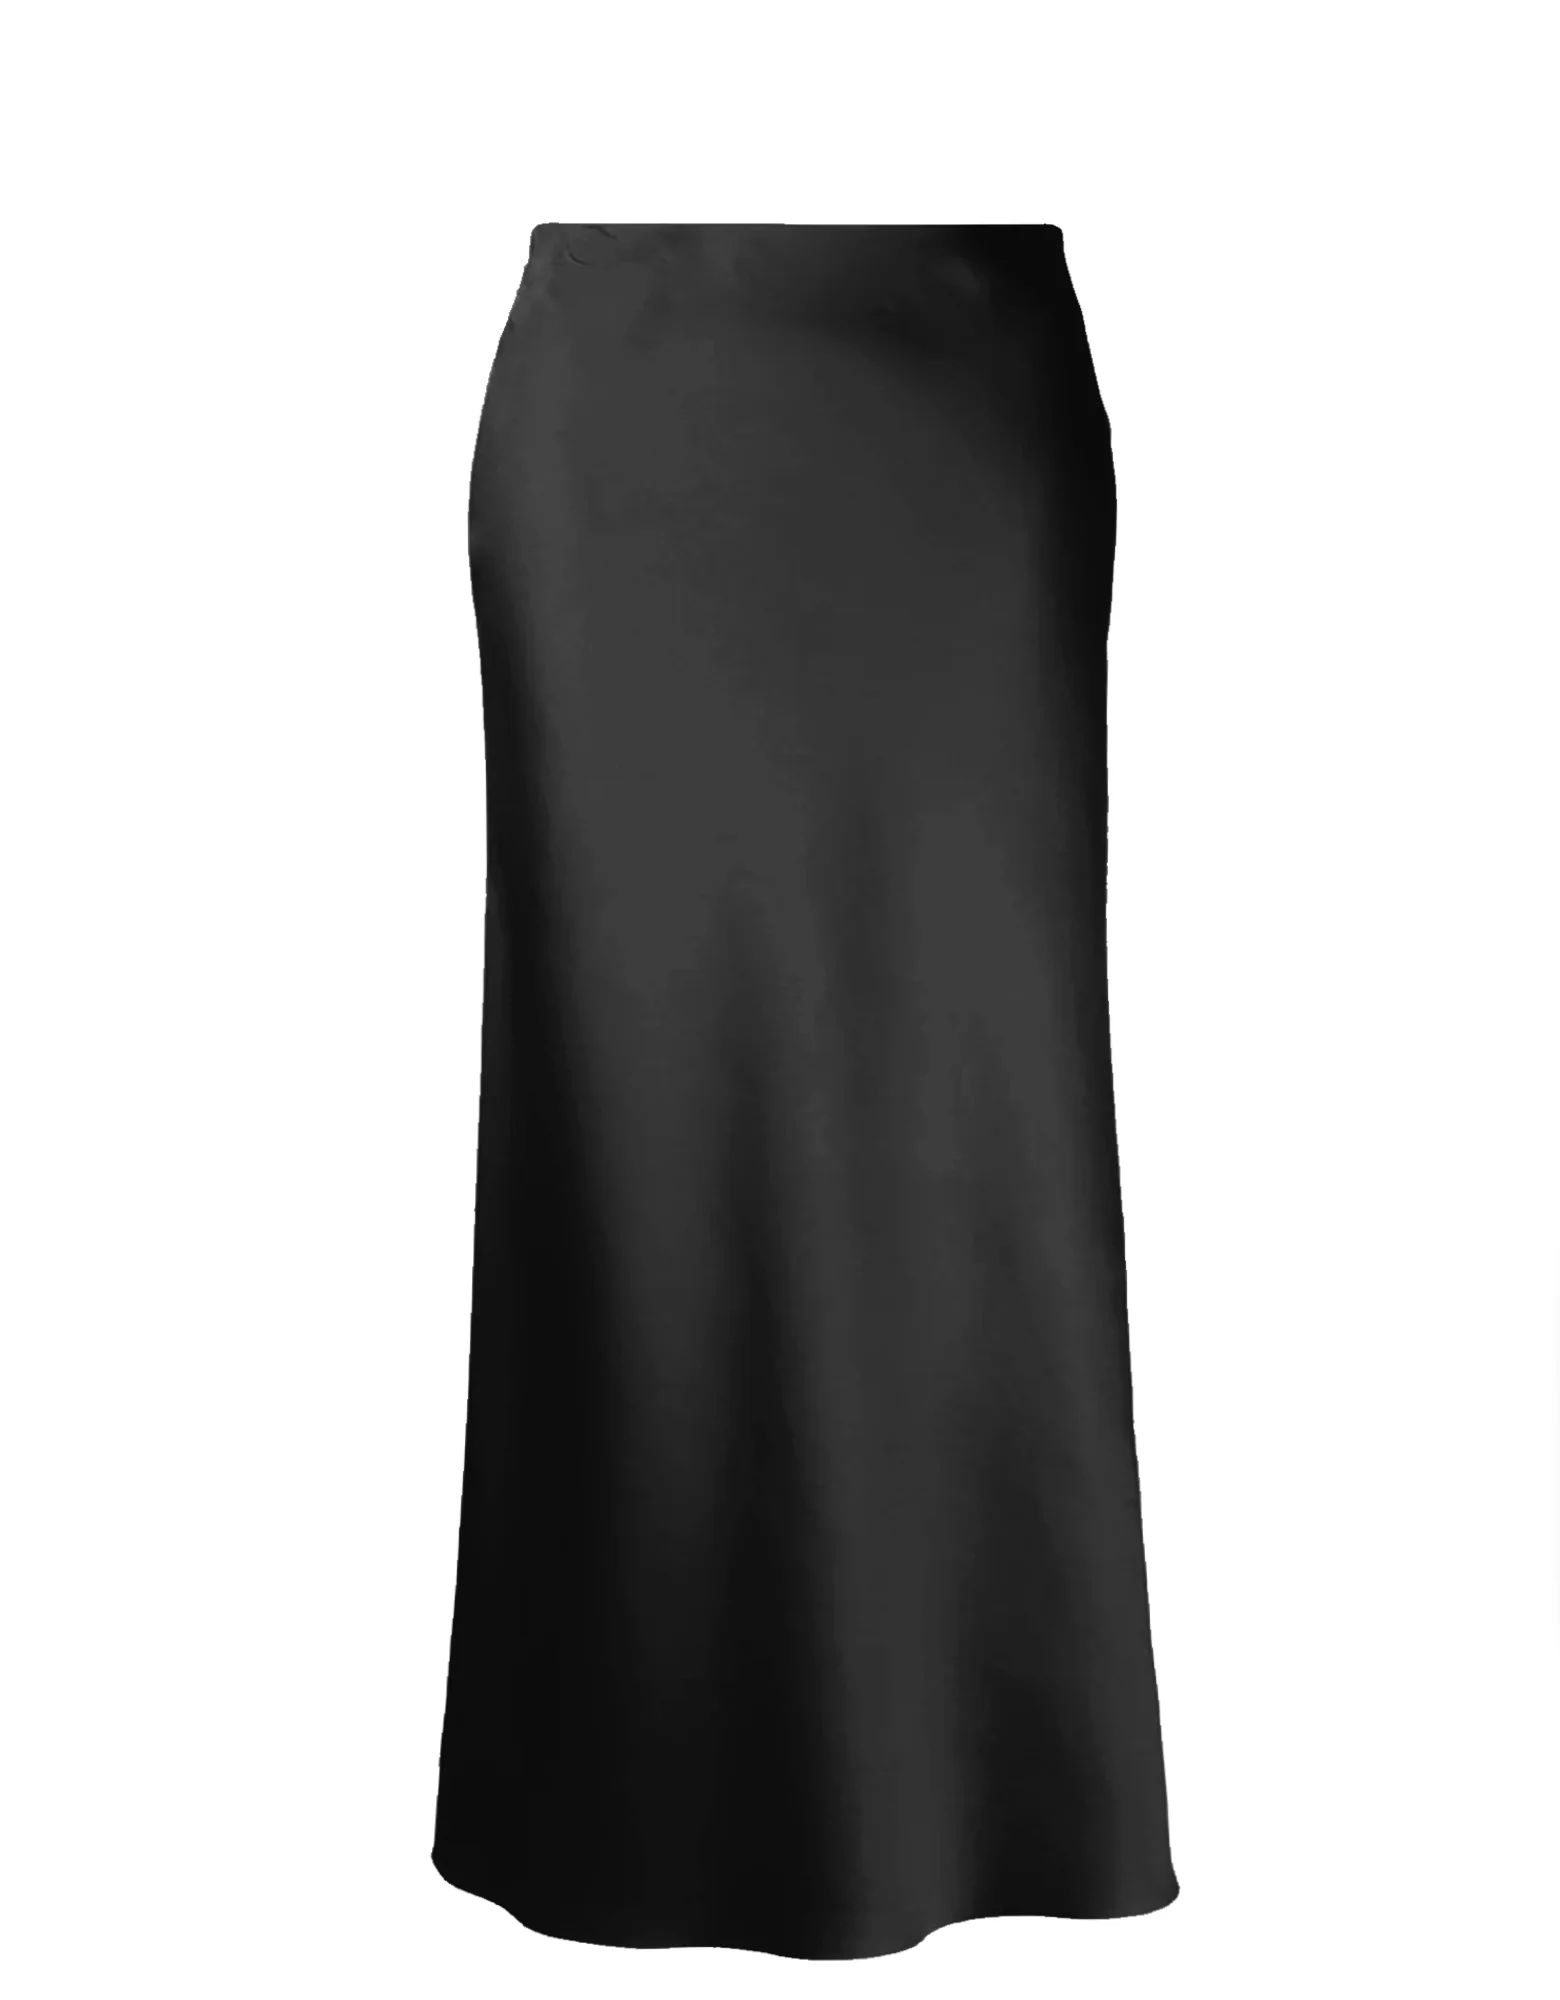 Black satin bias maxi slip skirt Cynthia Vincent Baacal | BAACAL Limited, LLC